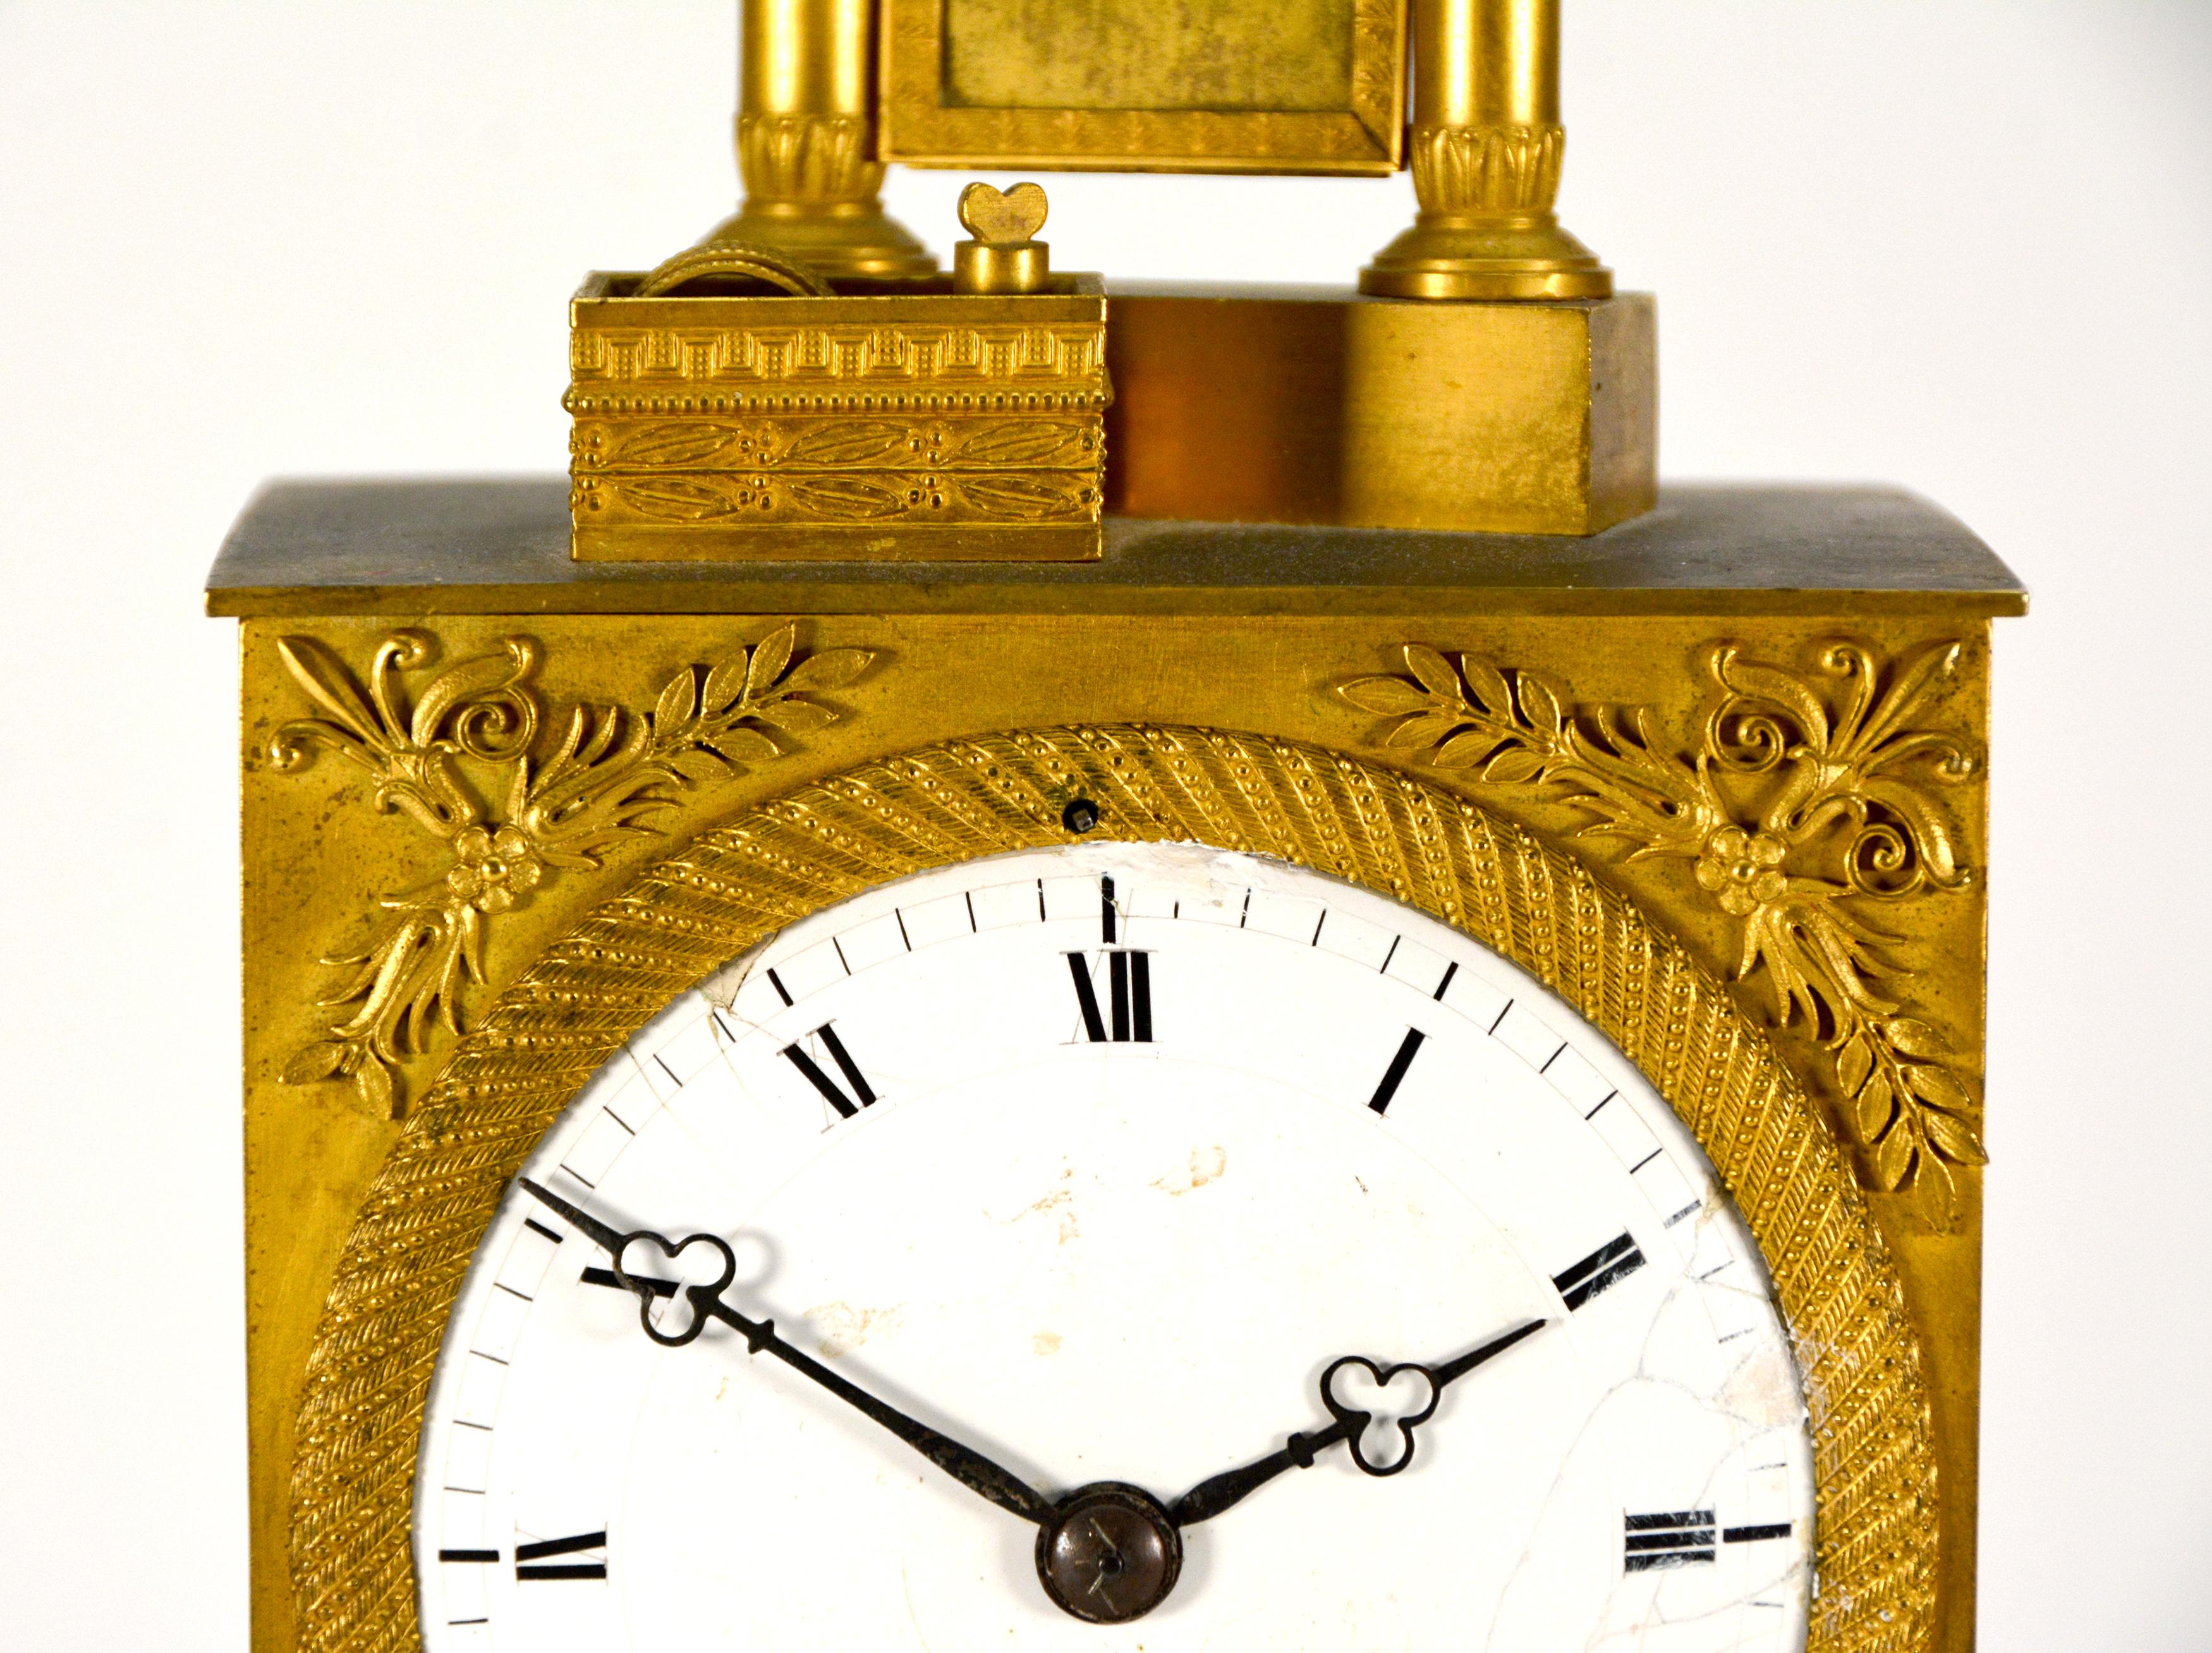 1880 French Silk Suspension Ormolu Empire Bronze Mantel Clock by Angevin A Paris For Sale 5